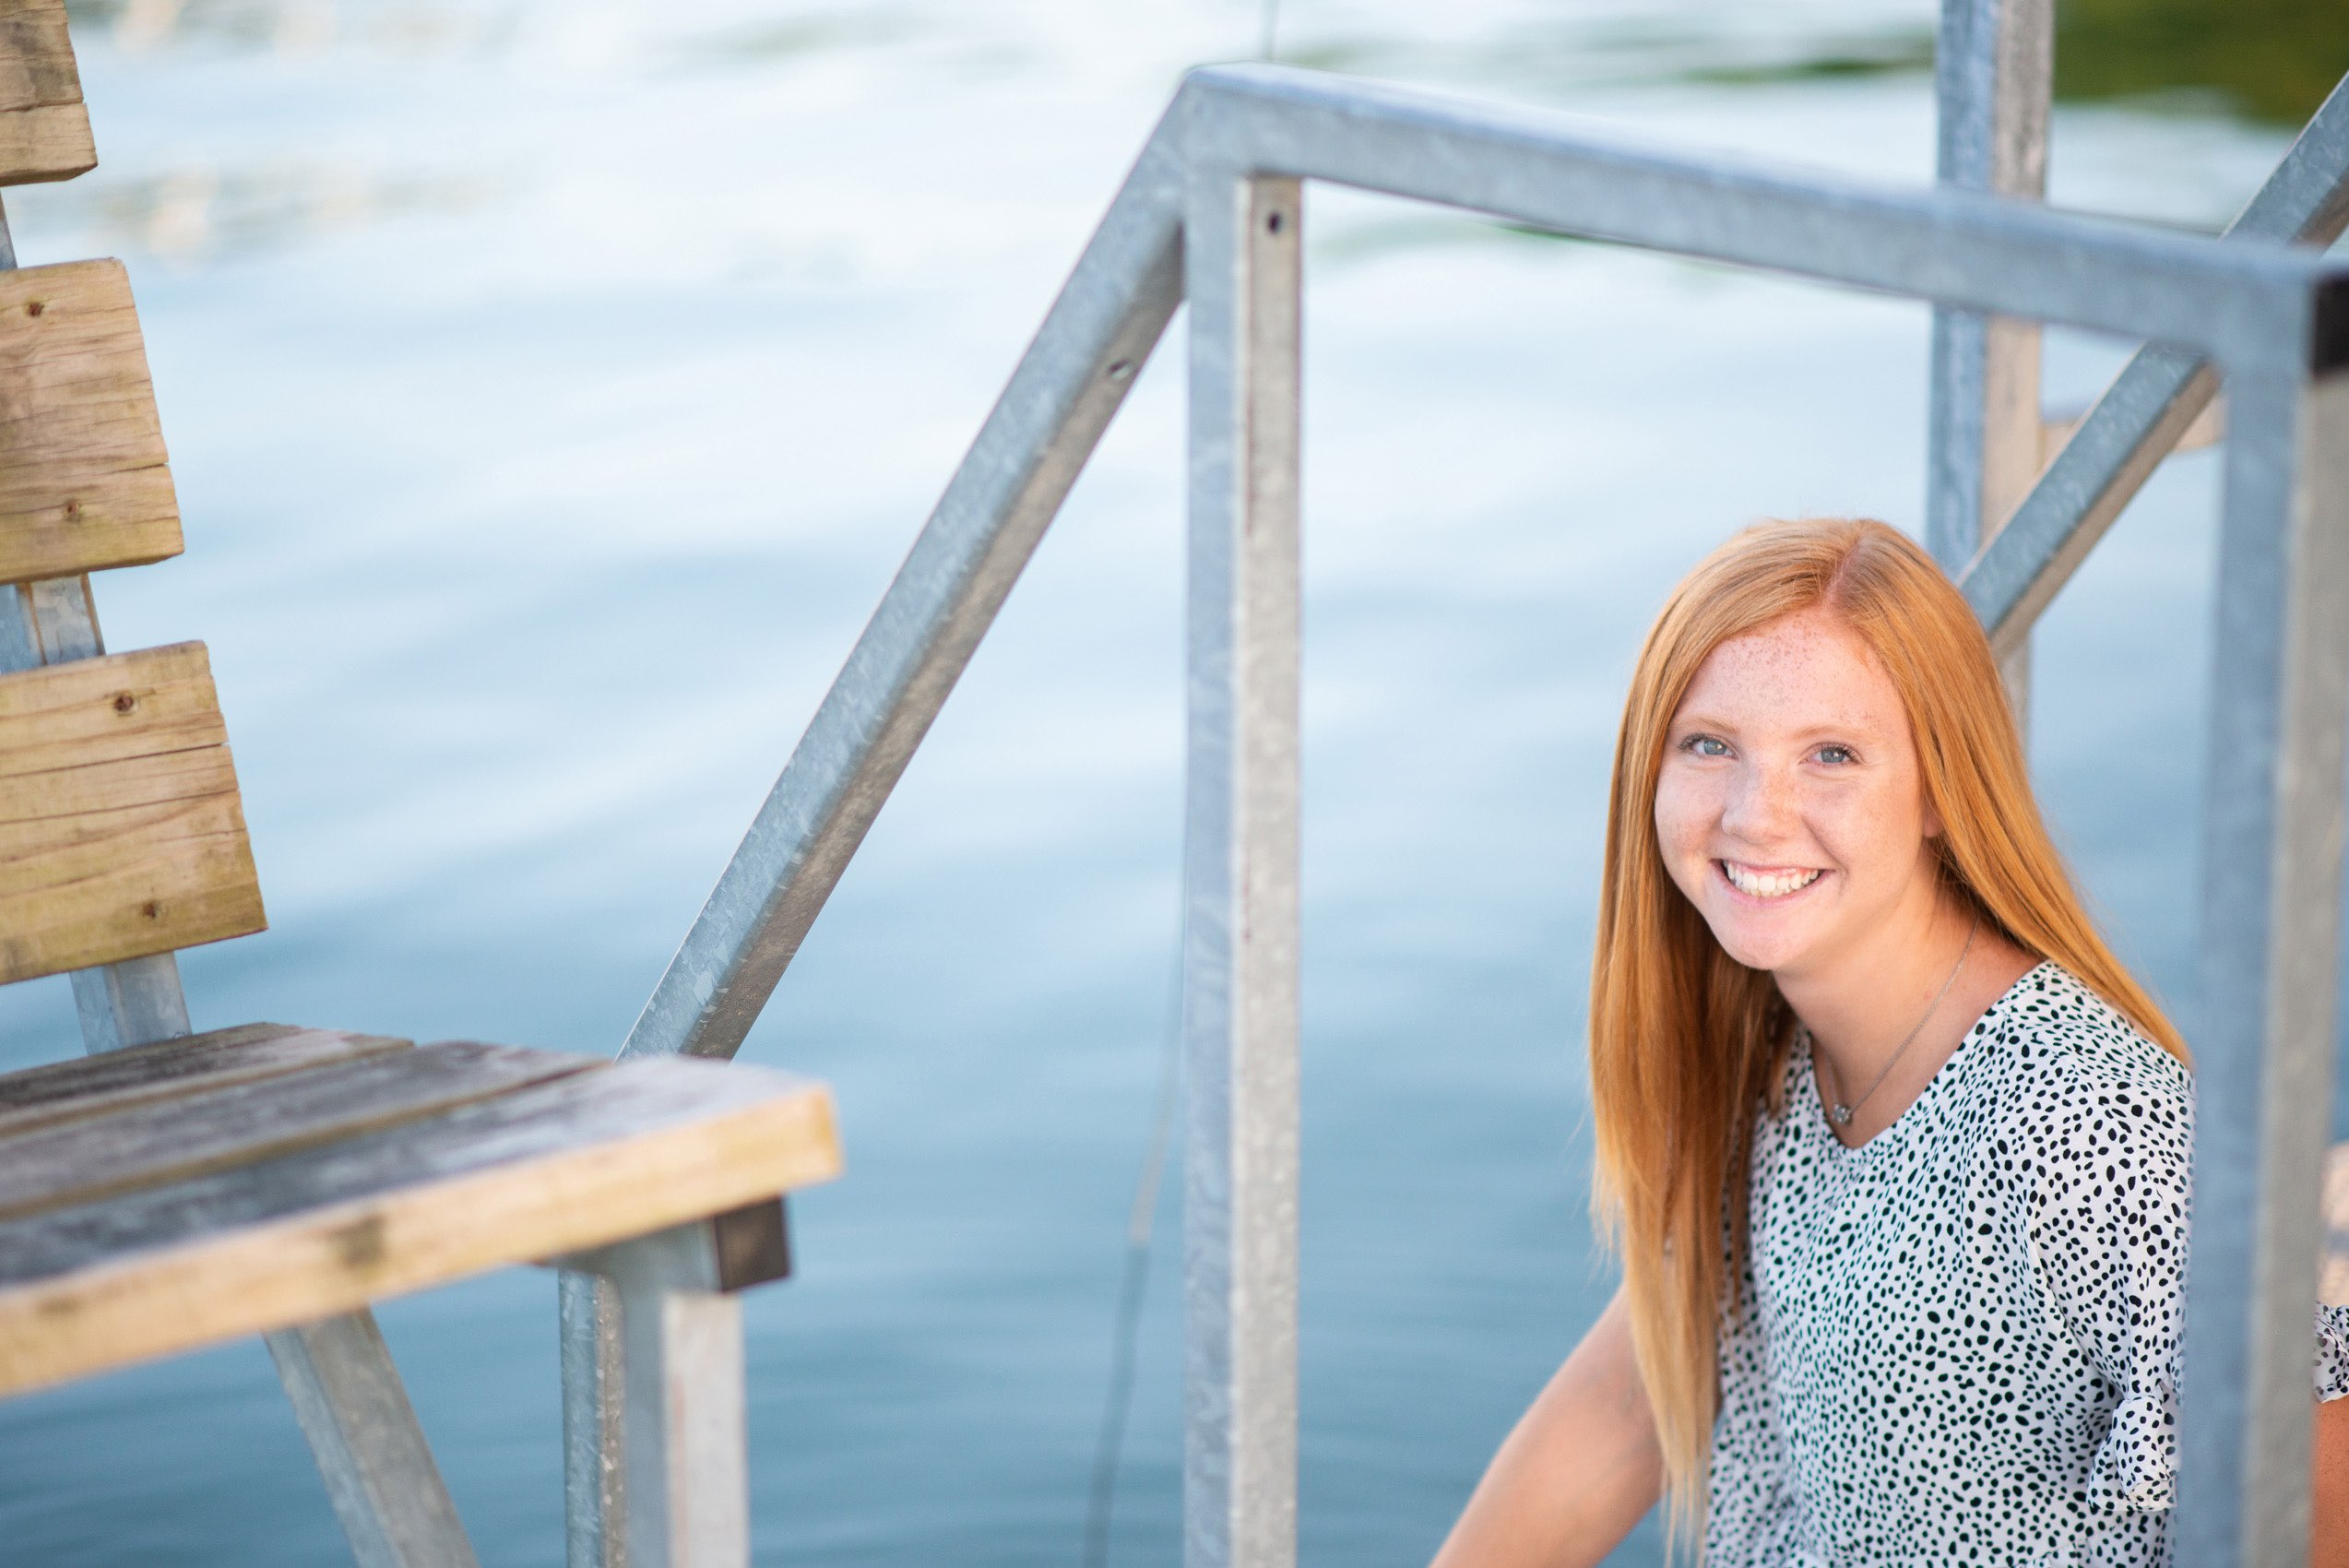 Senior girl in print top smiling for photos at Tablerock Lake dock.